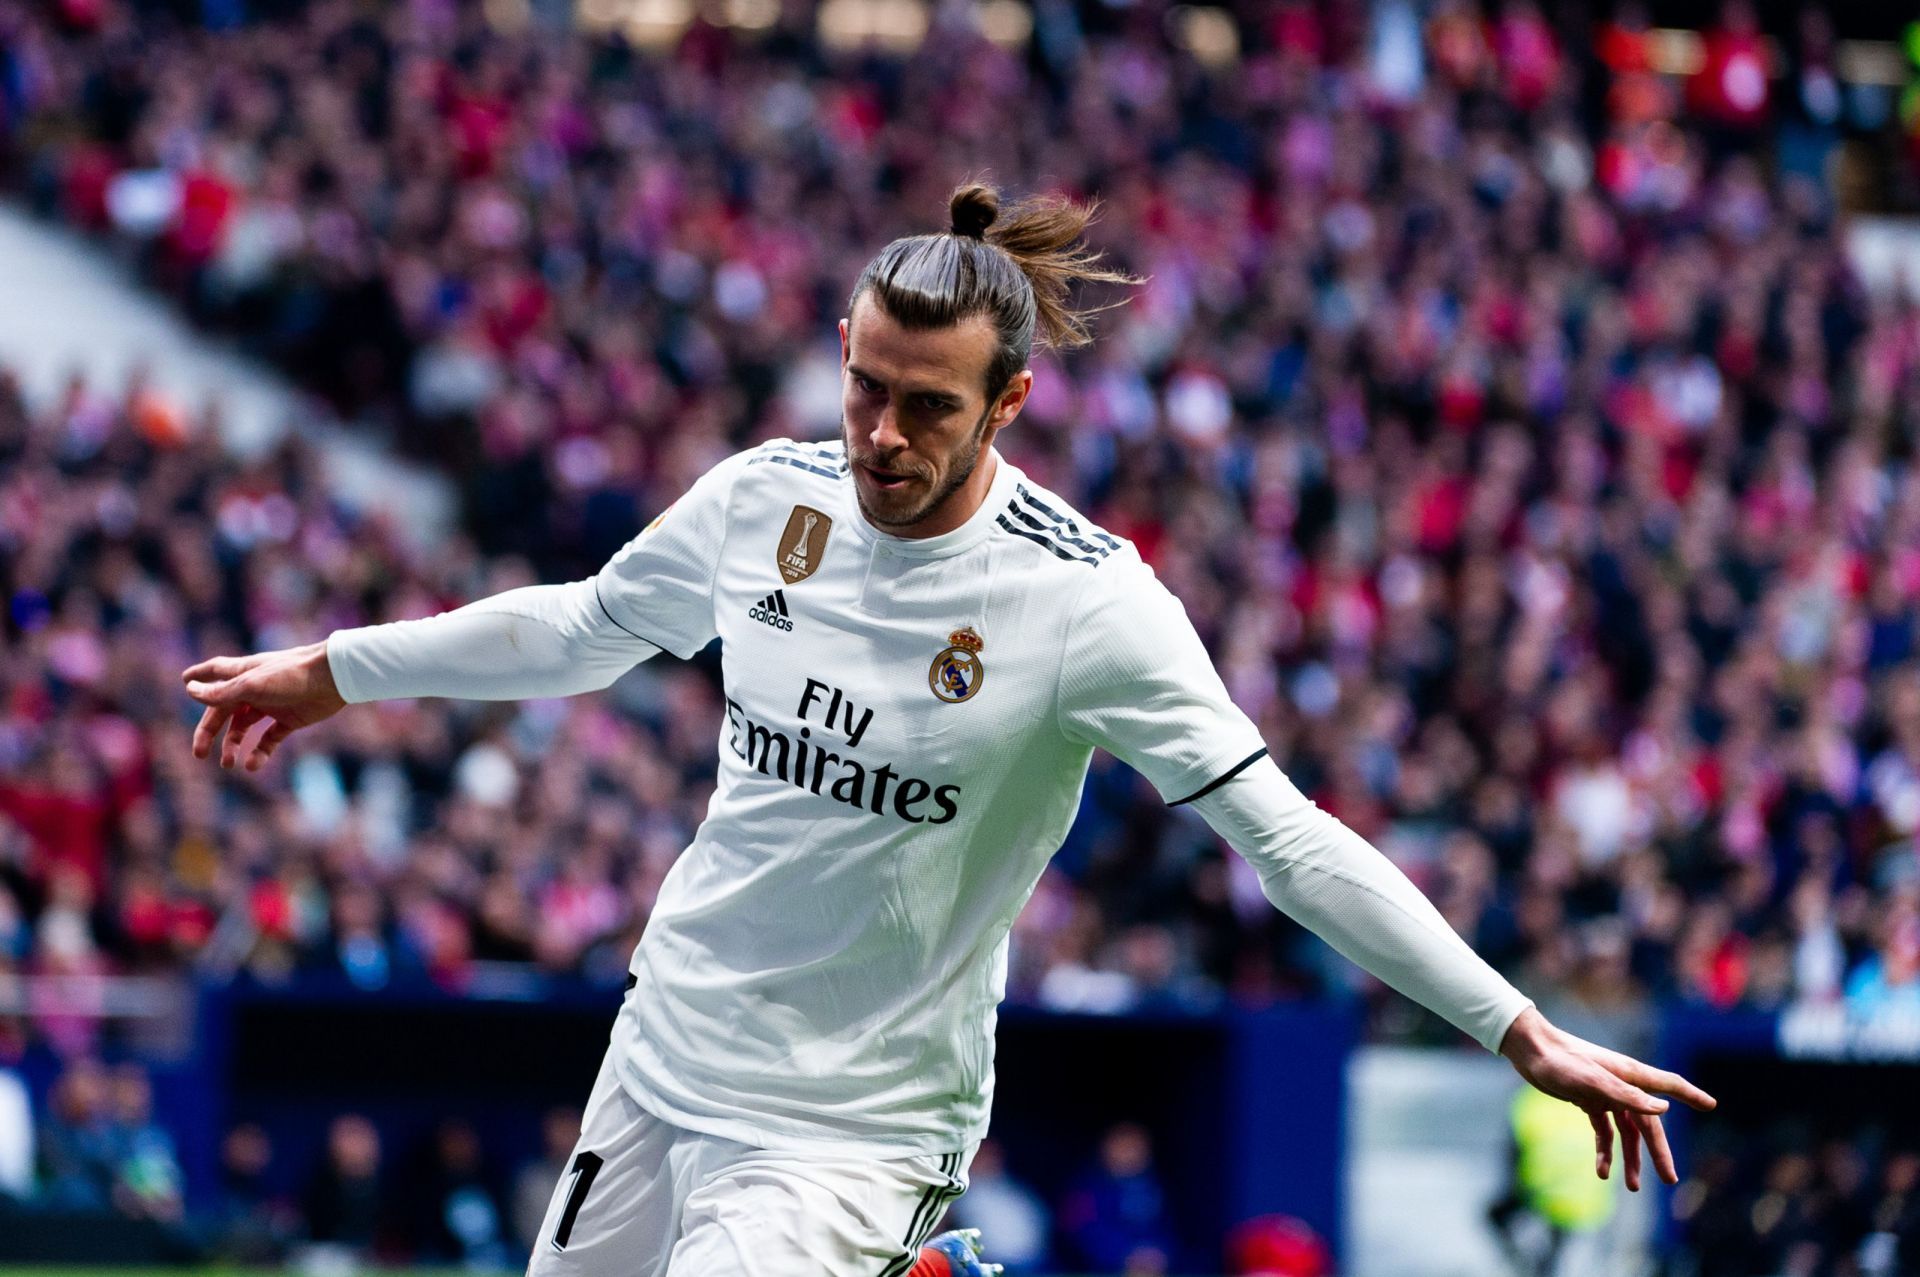 Gareth Bale celebrating scoring a goal for Real Madrid